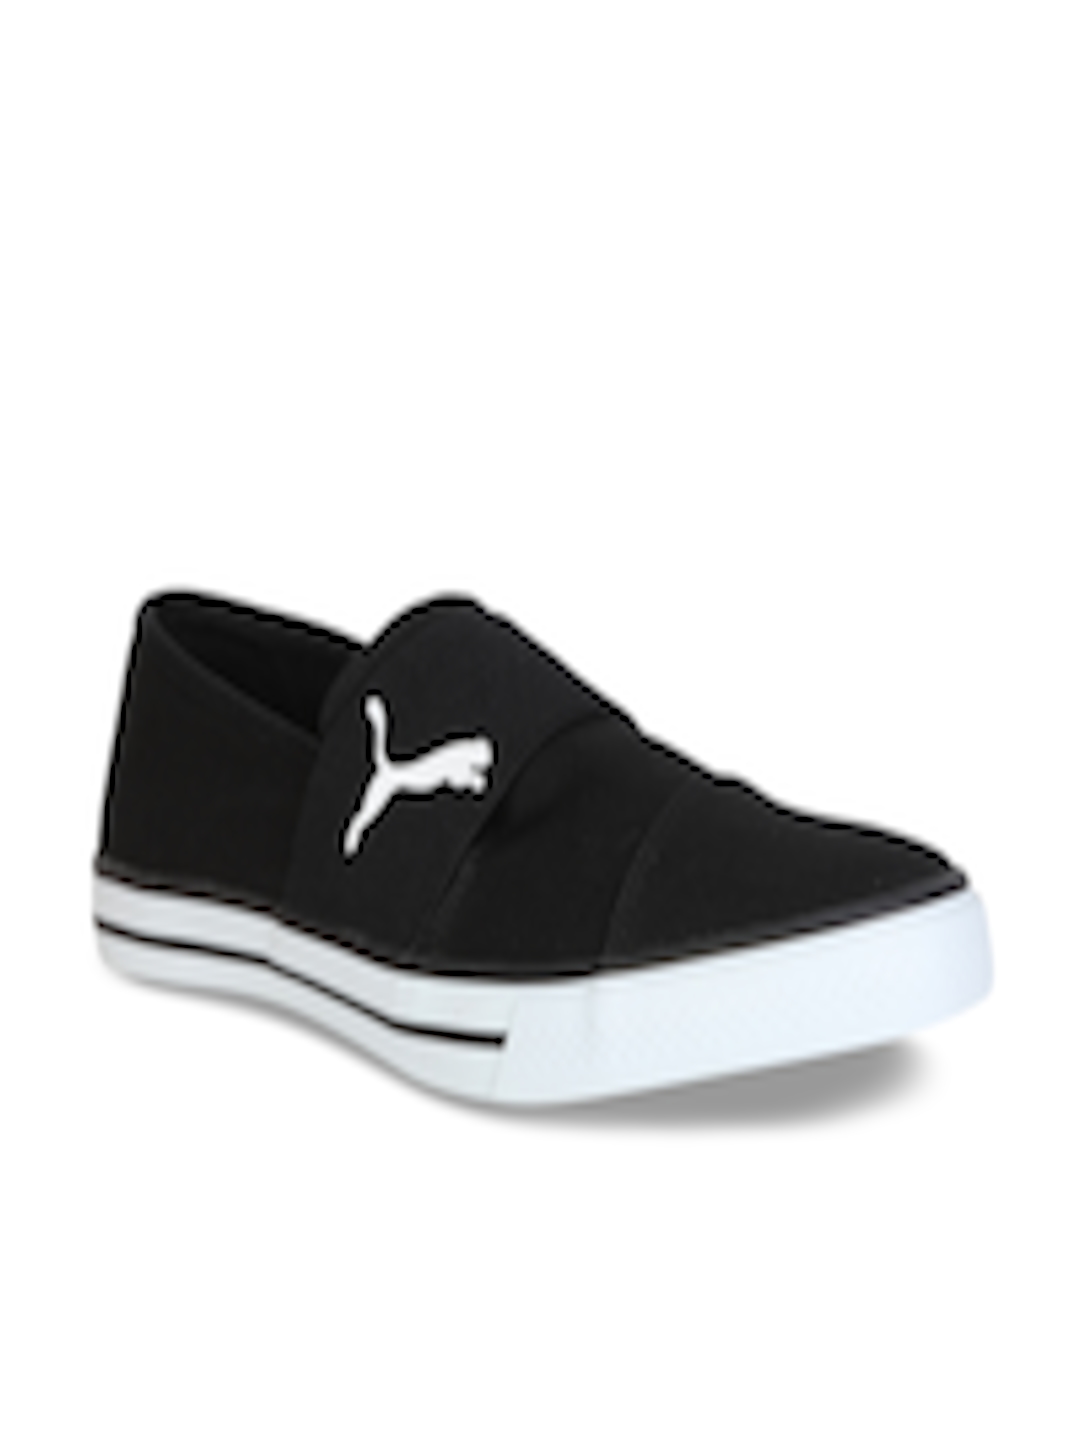 Buy Puma Men Black Slip On Sneakers - Casual Shoes for Men 6743759 | Myntra